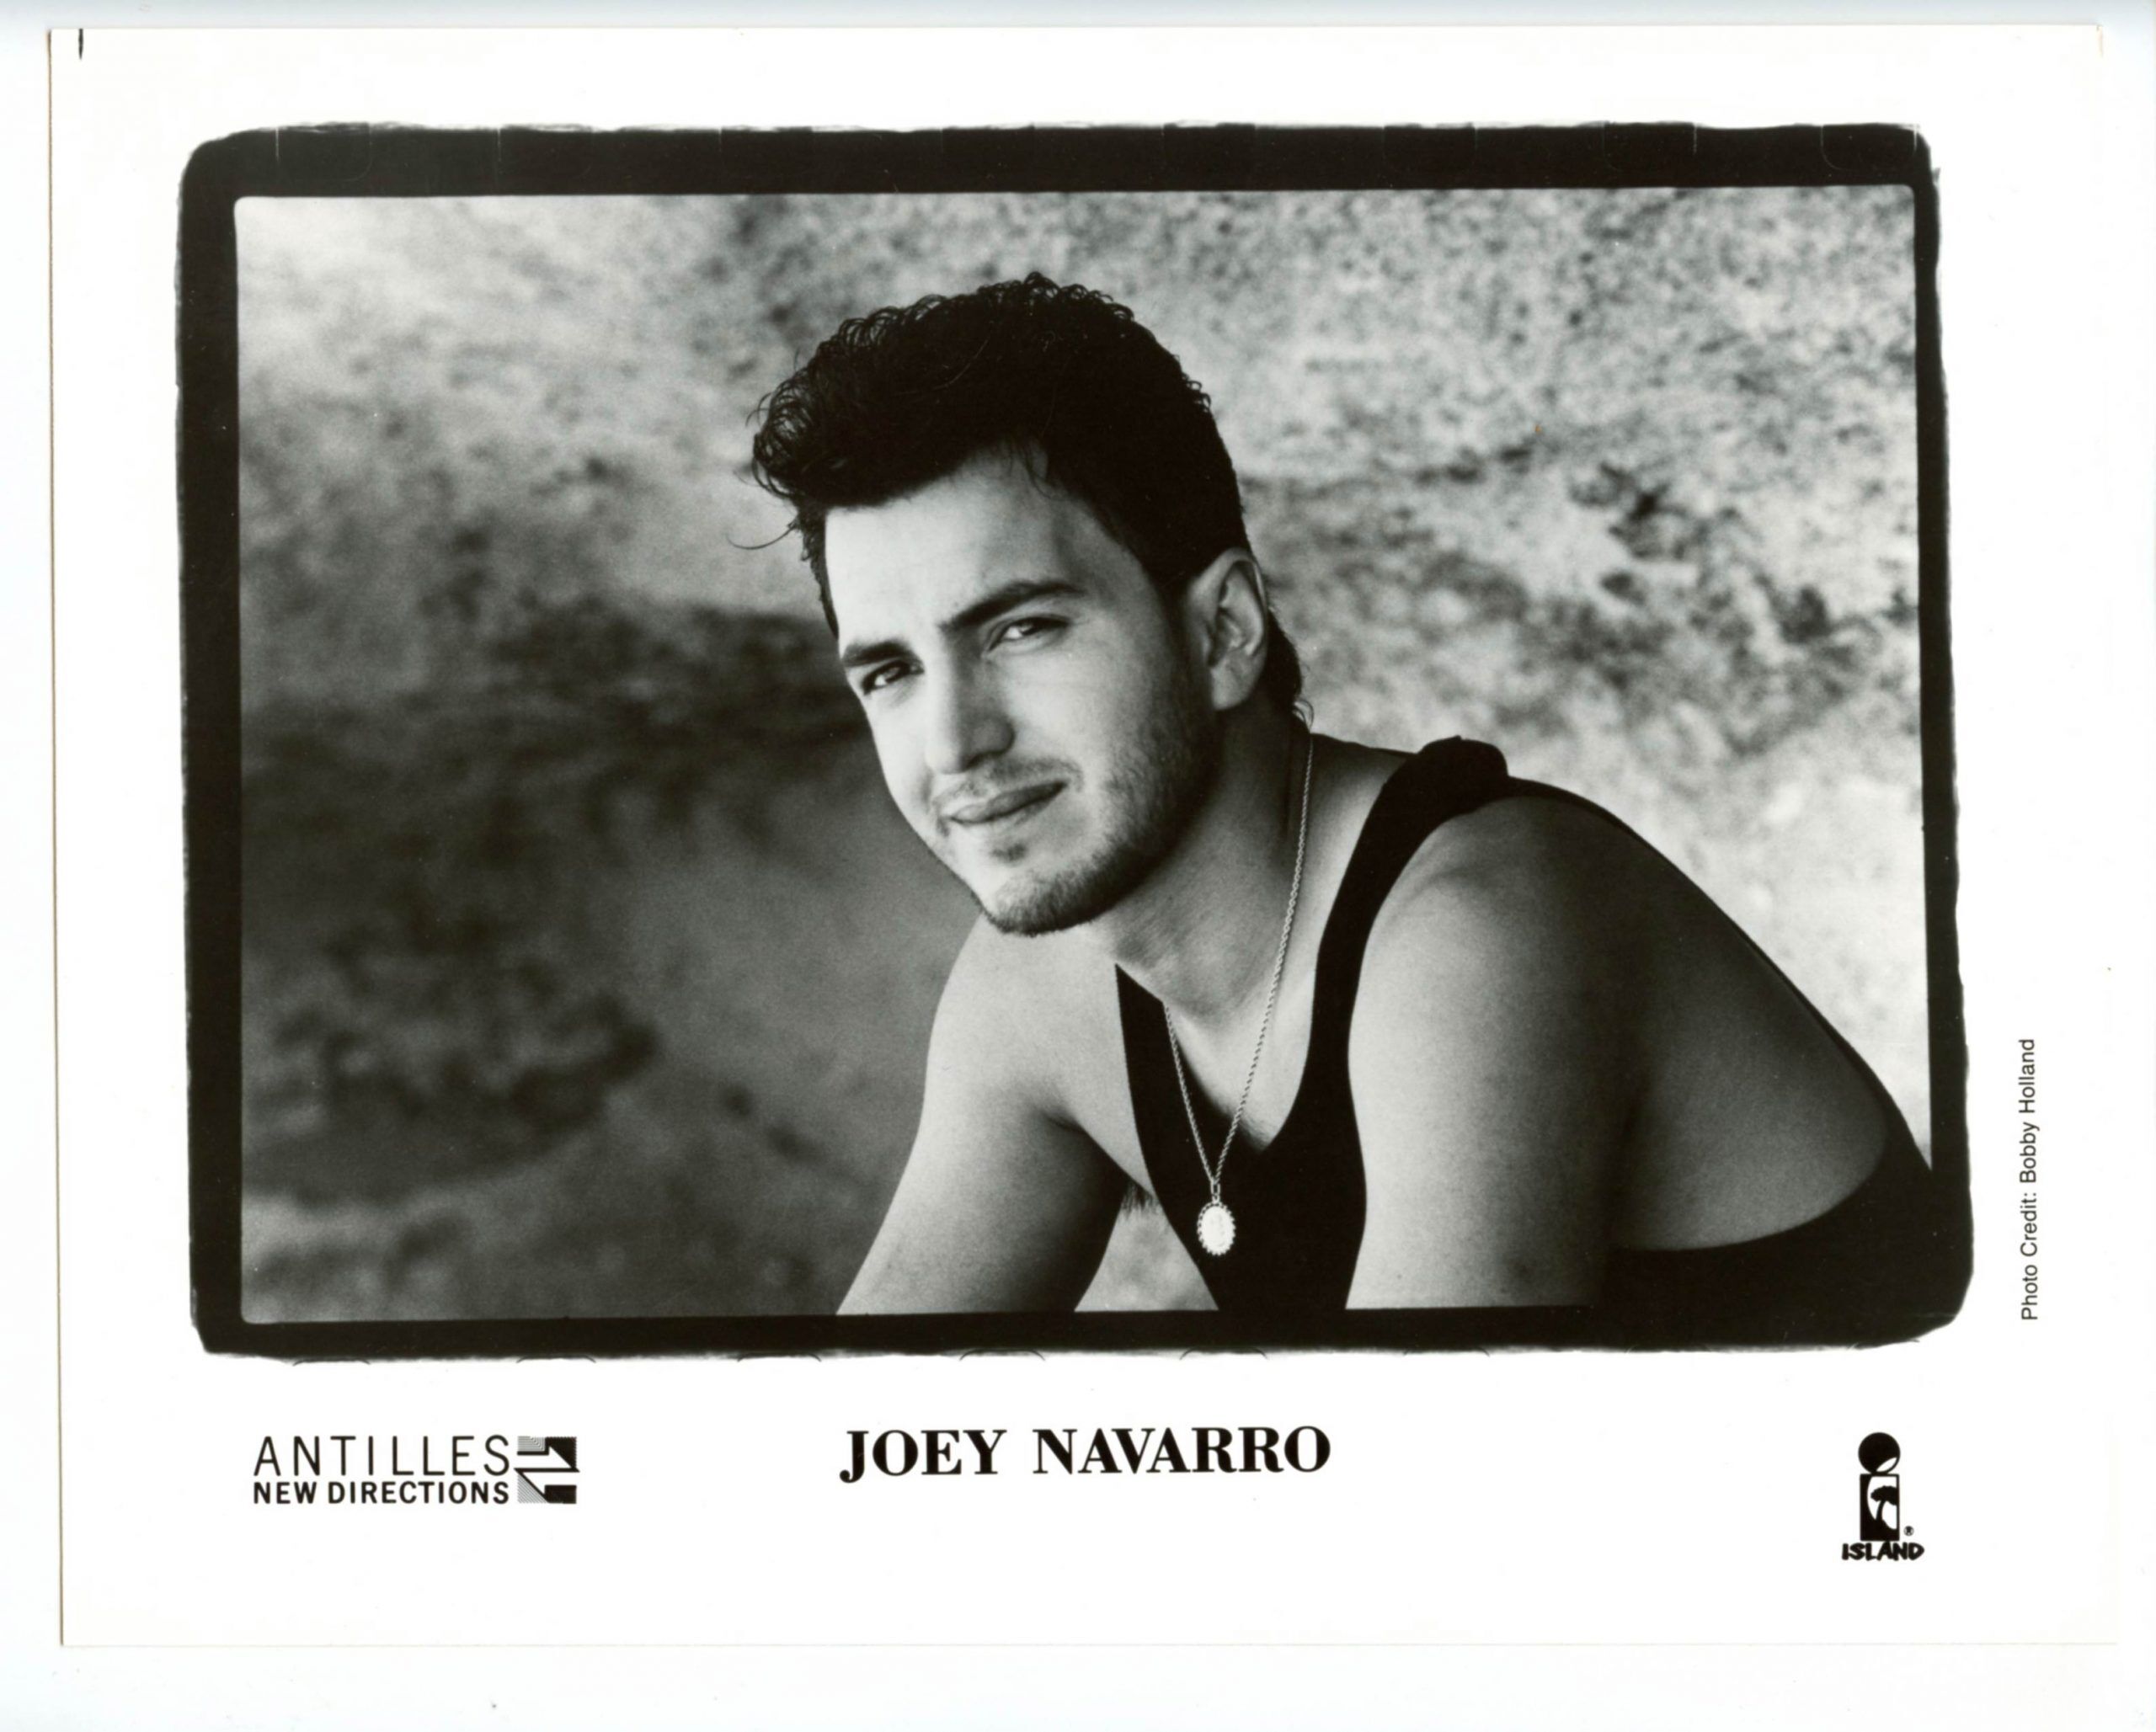 Joey Navarro Photo 1988 Antilles New Directions